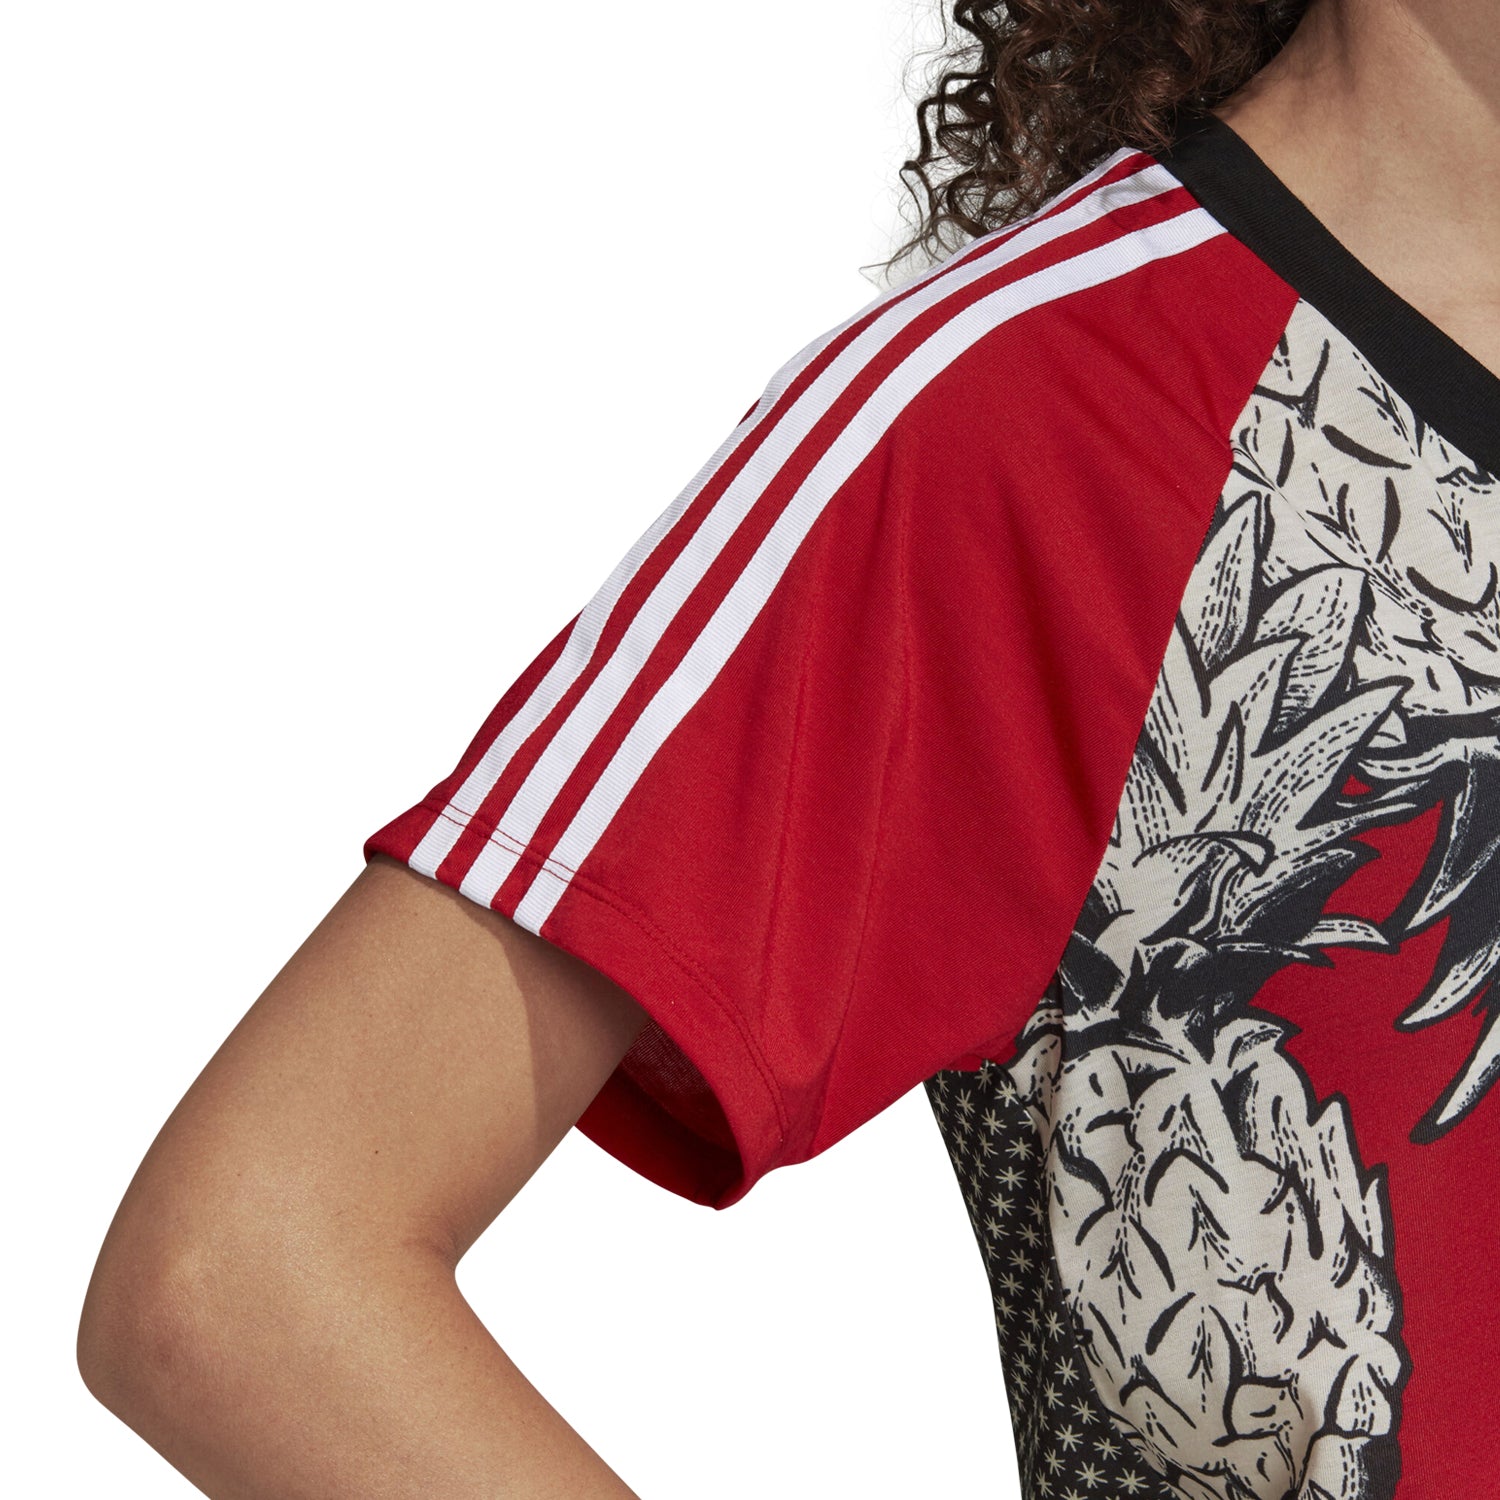 adidas Originals x Farm Women's Graphic Tee Shirt - Multi